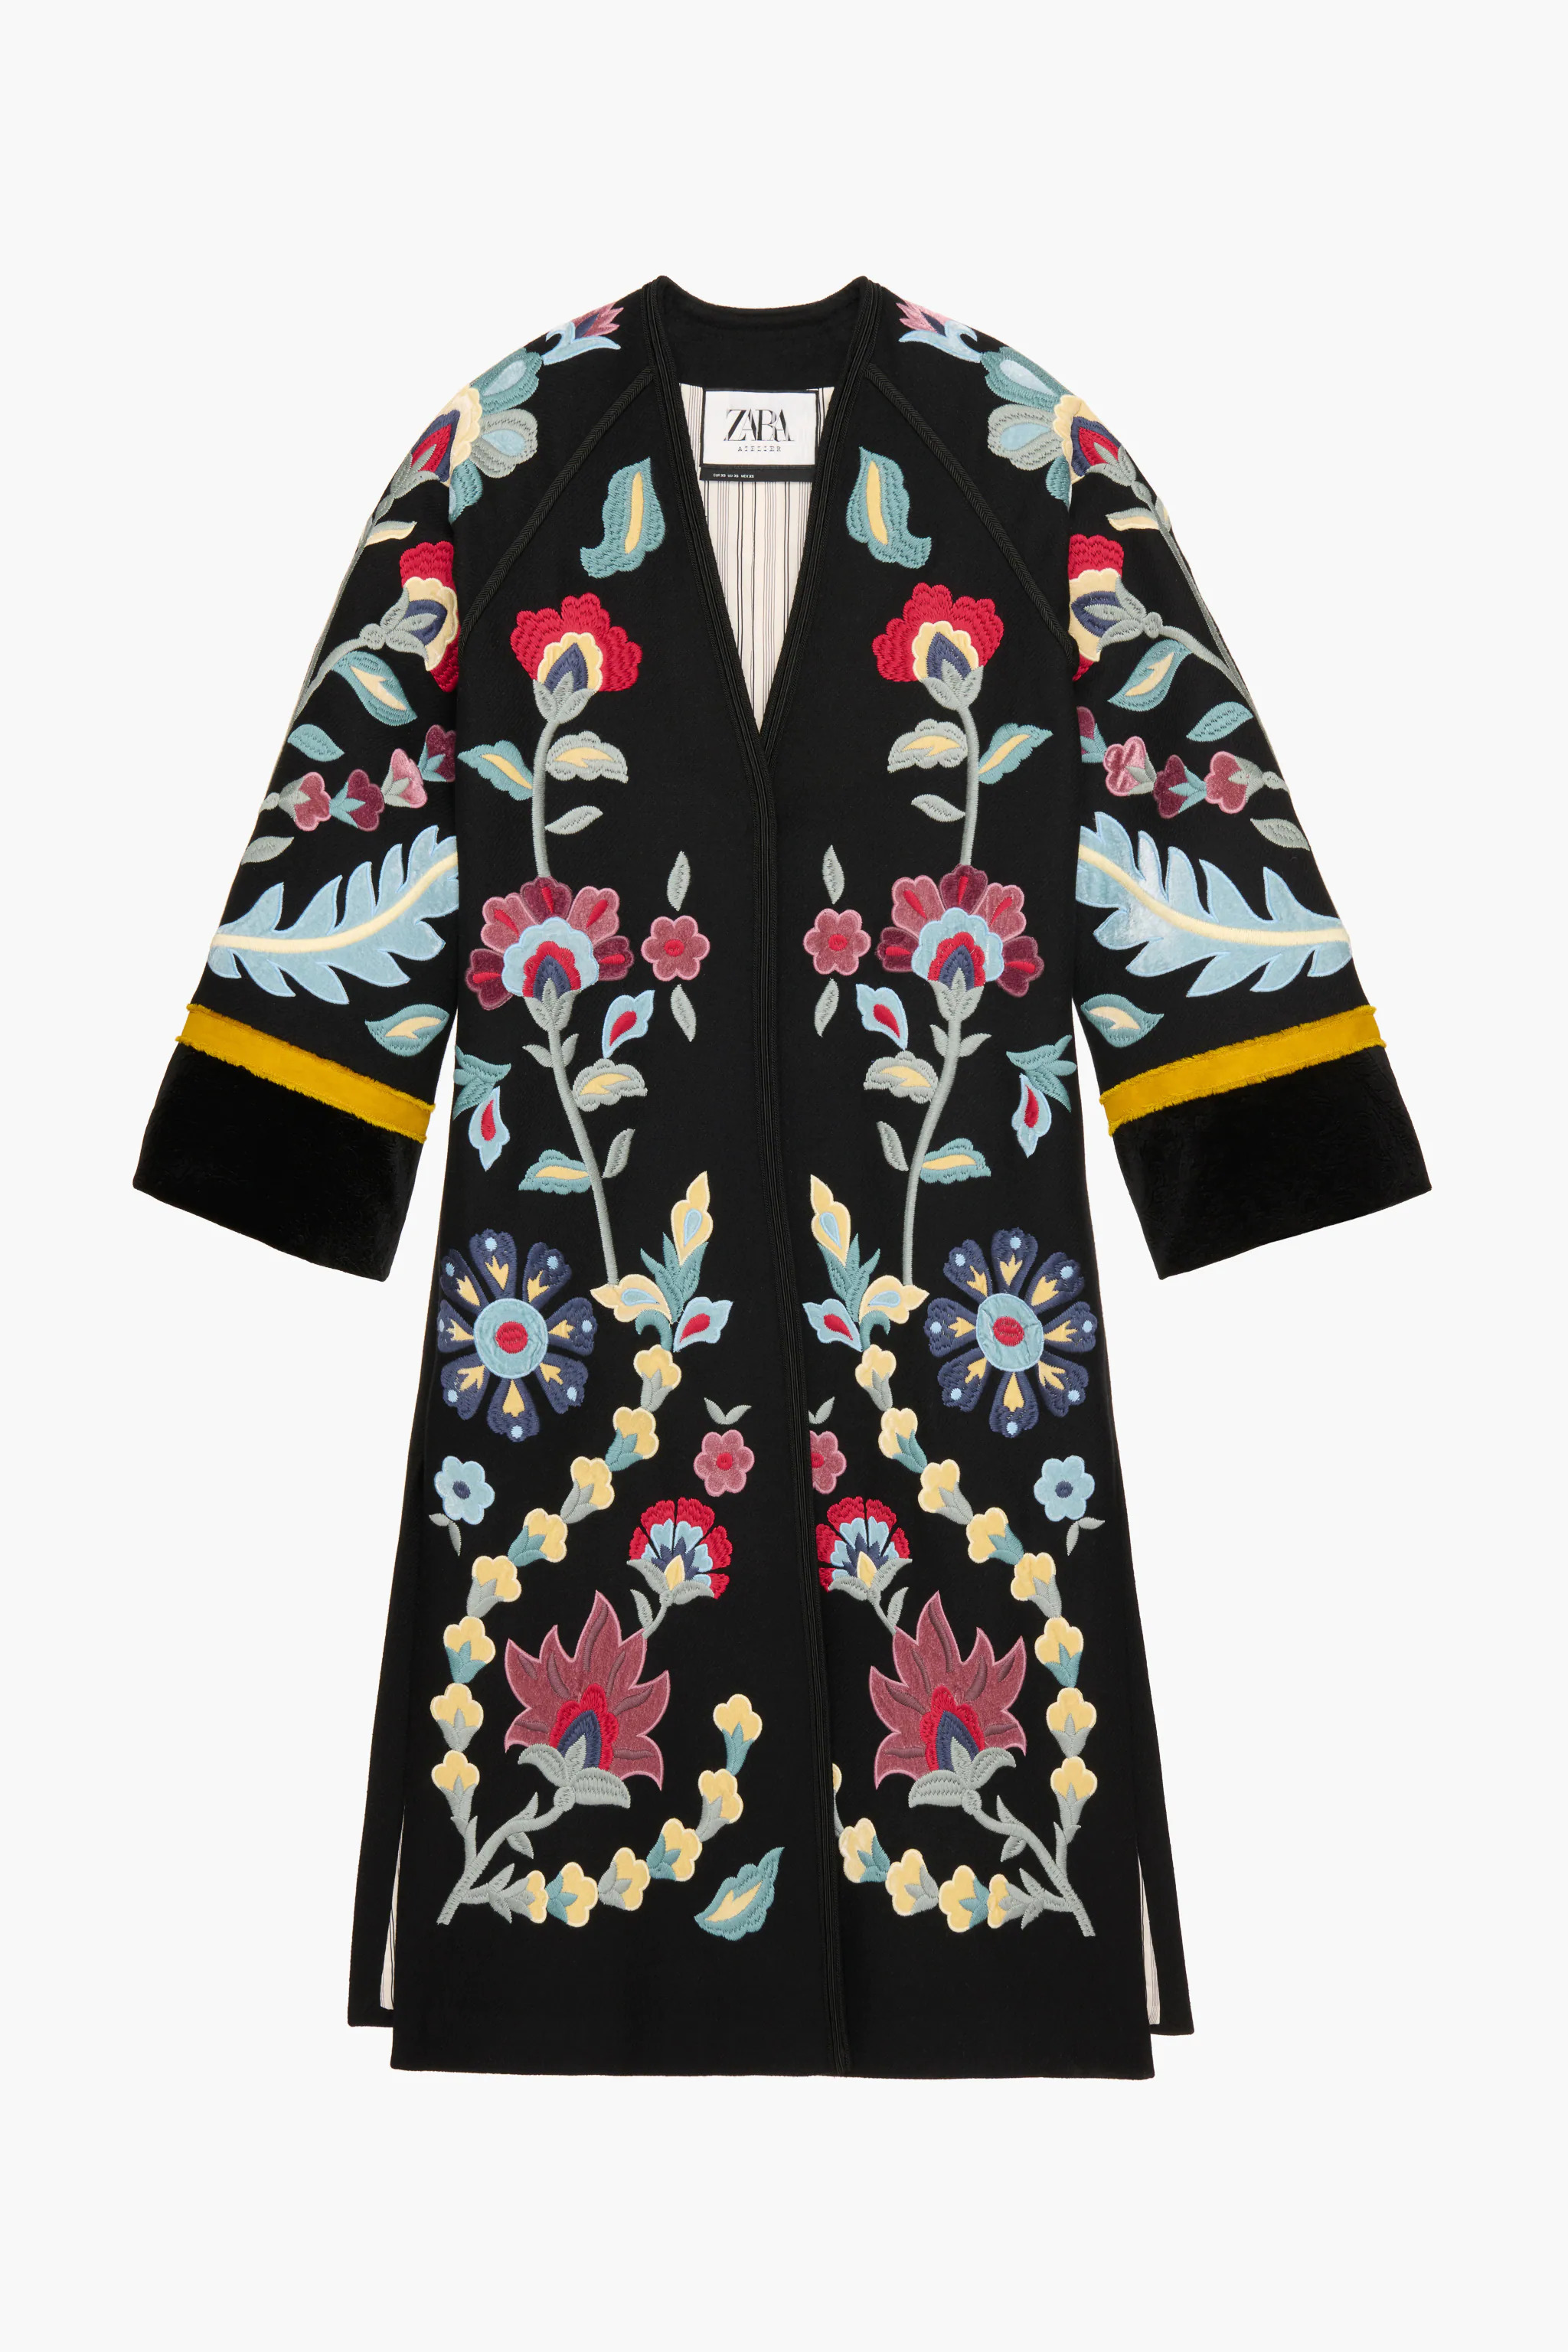 Abrigo kimono, de Zara Atelier.